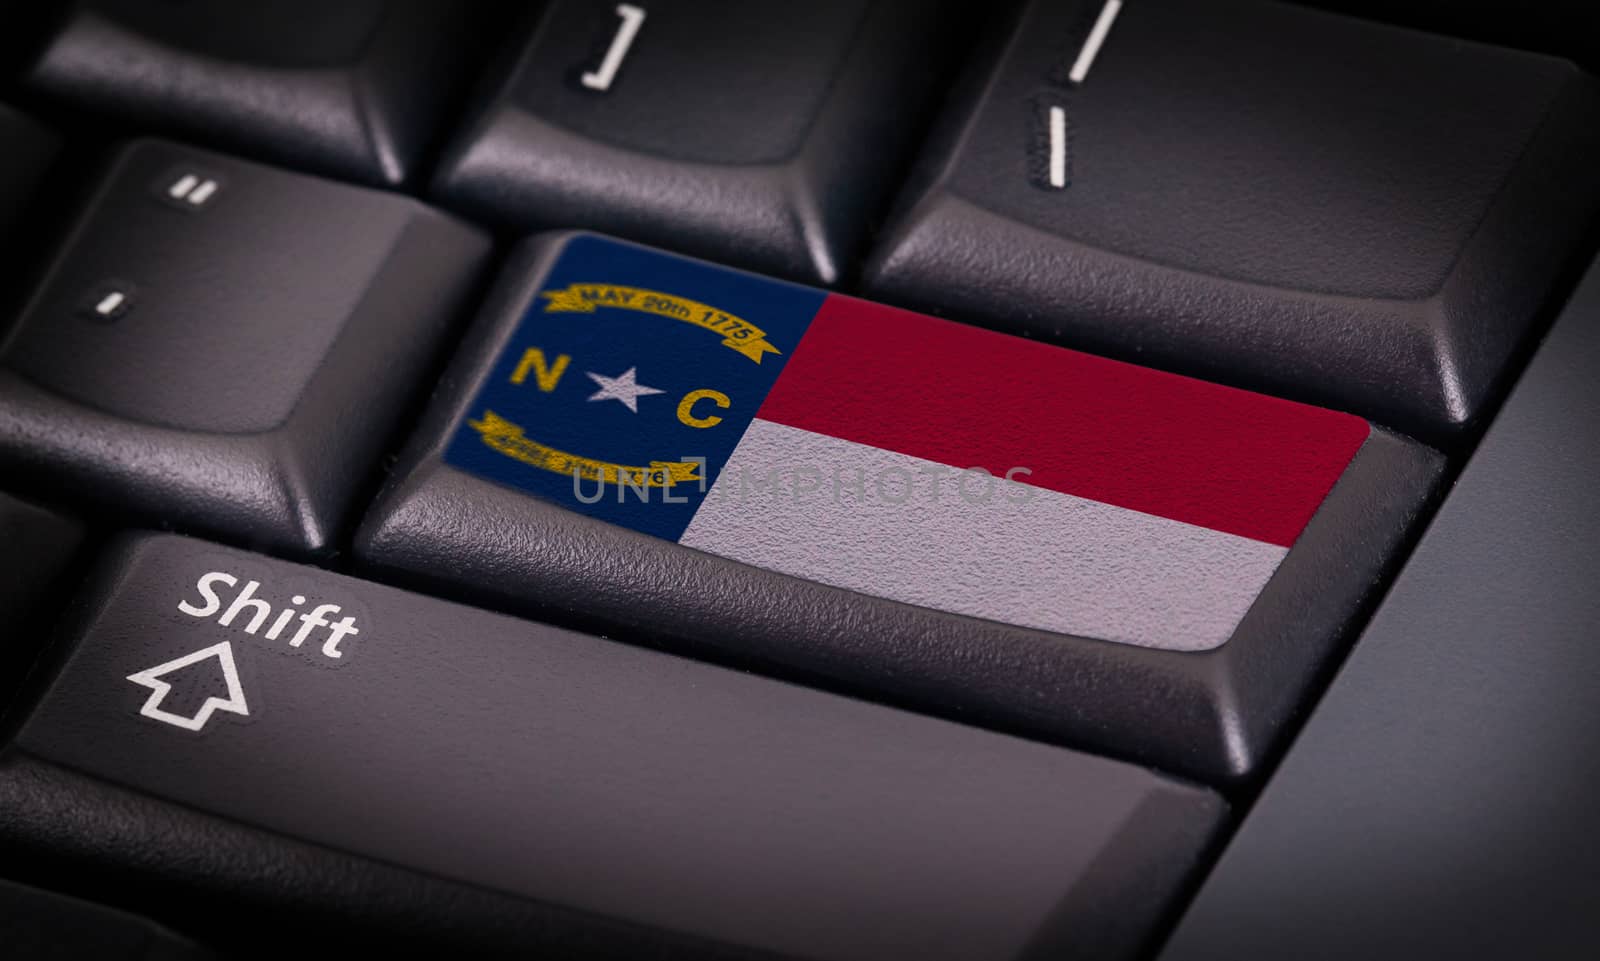 Flag on button keyboard, flag of North Carolina